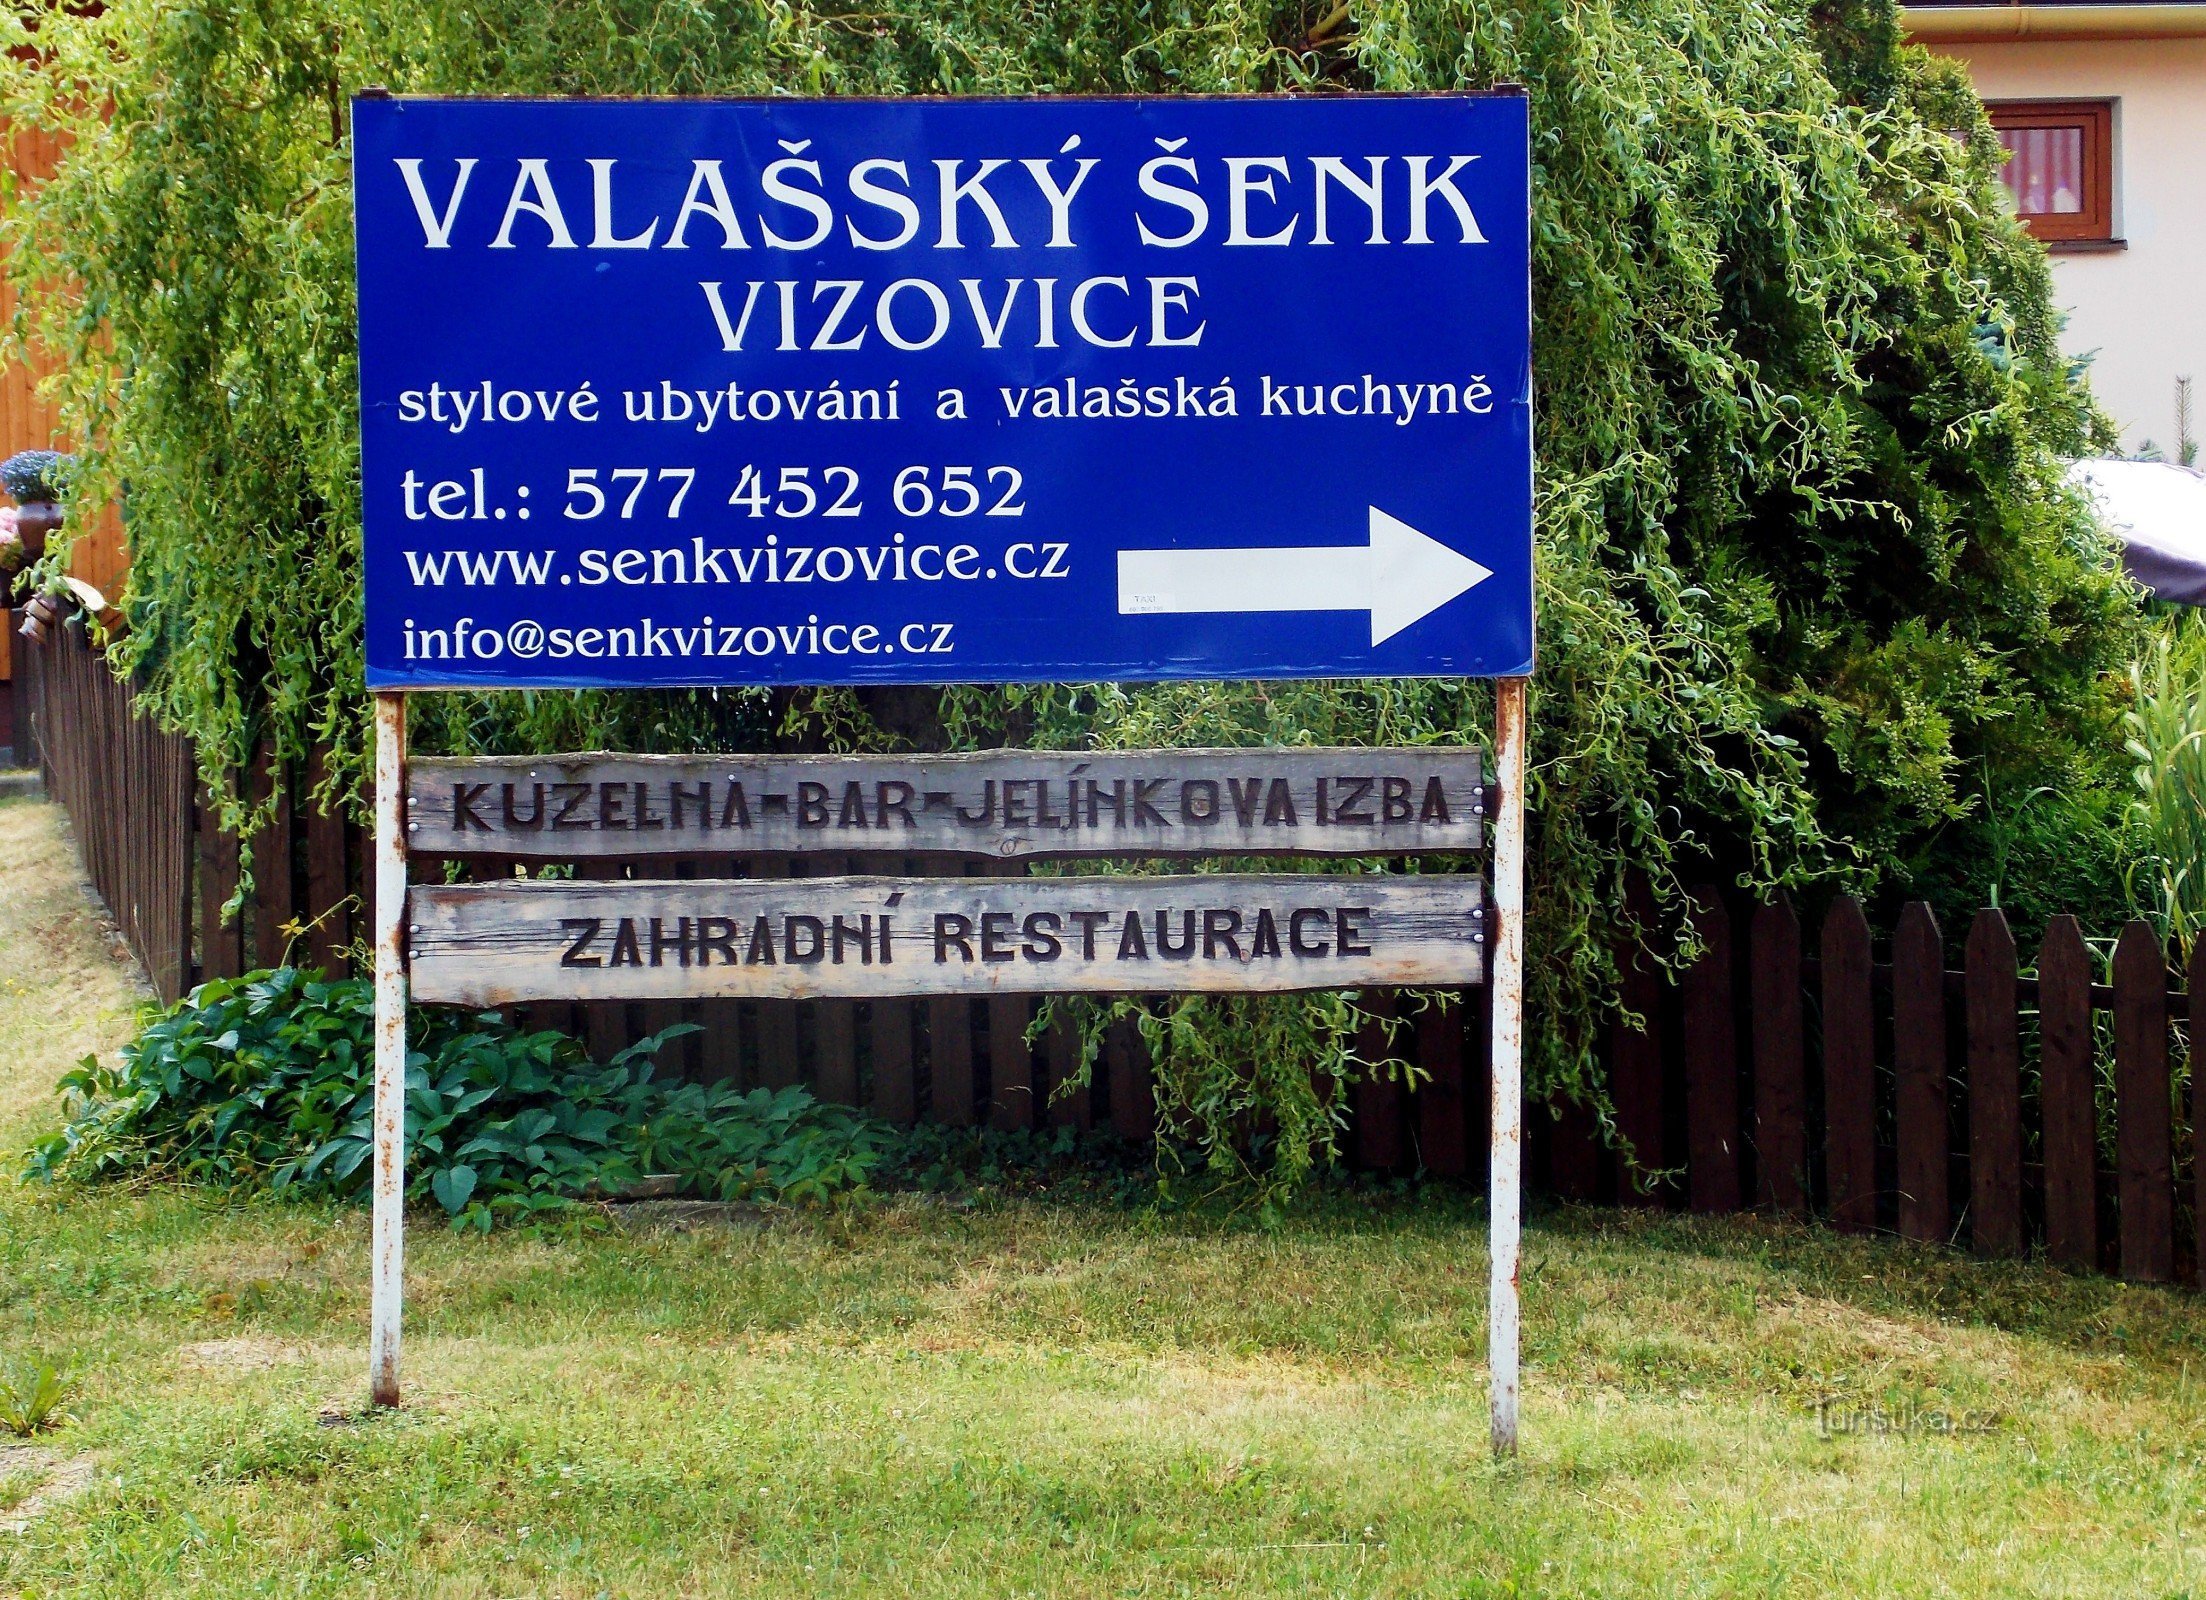 From Vizovice square to Janova hora